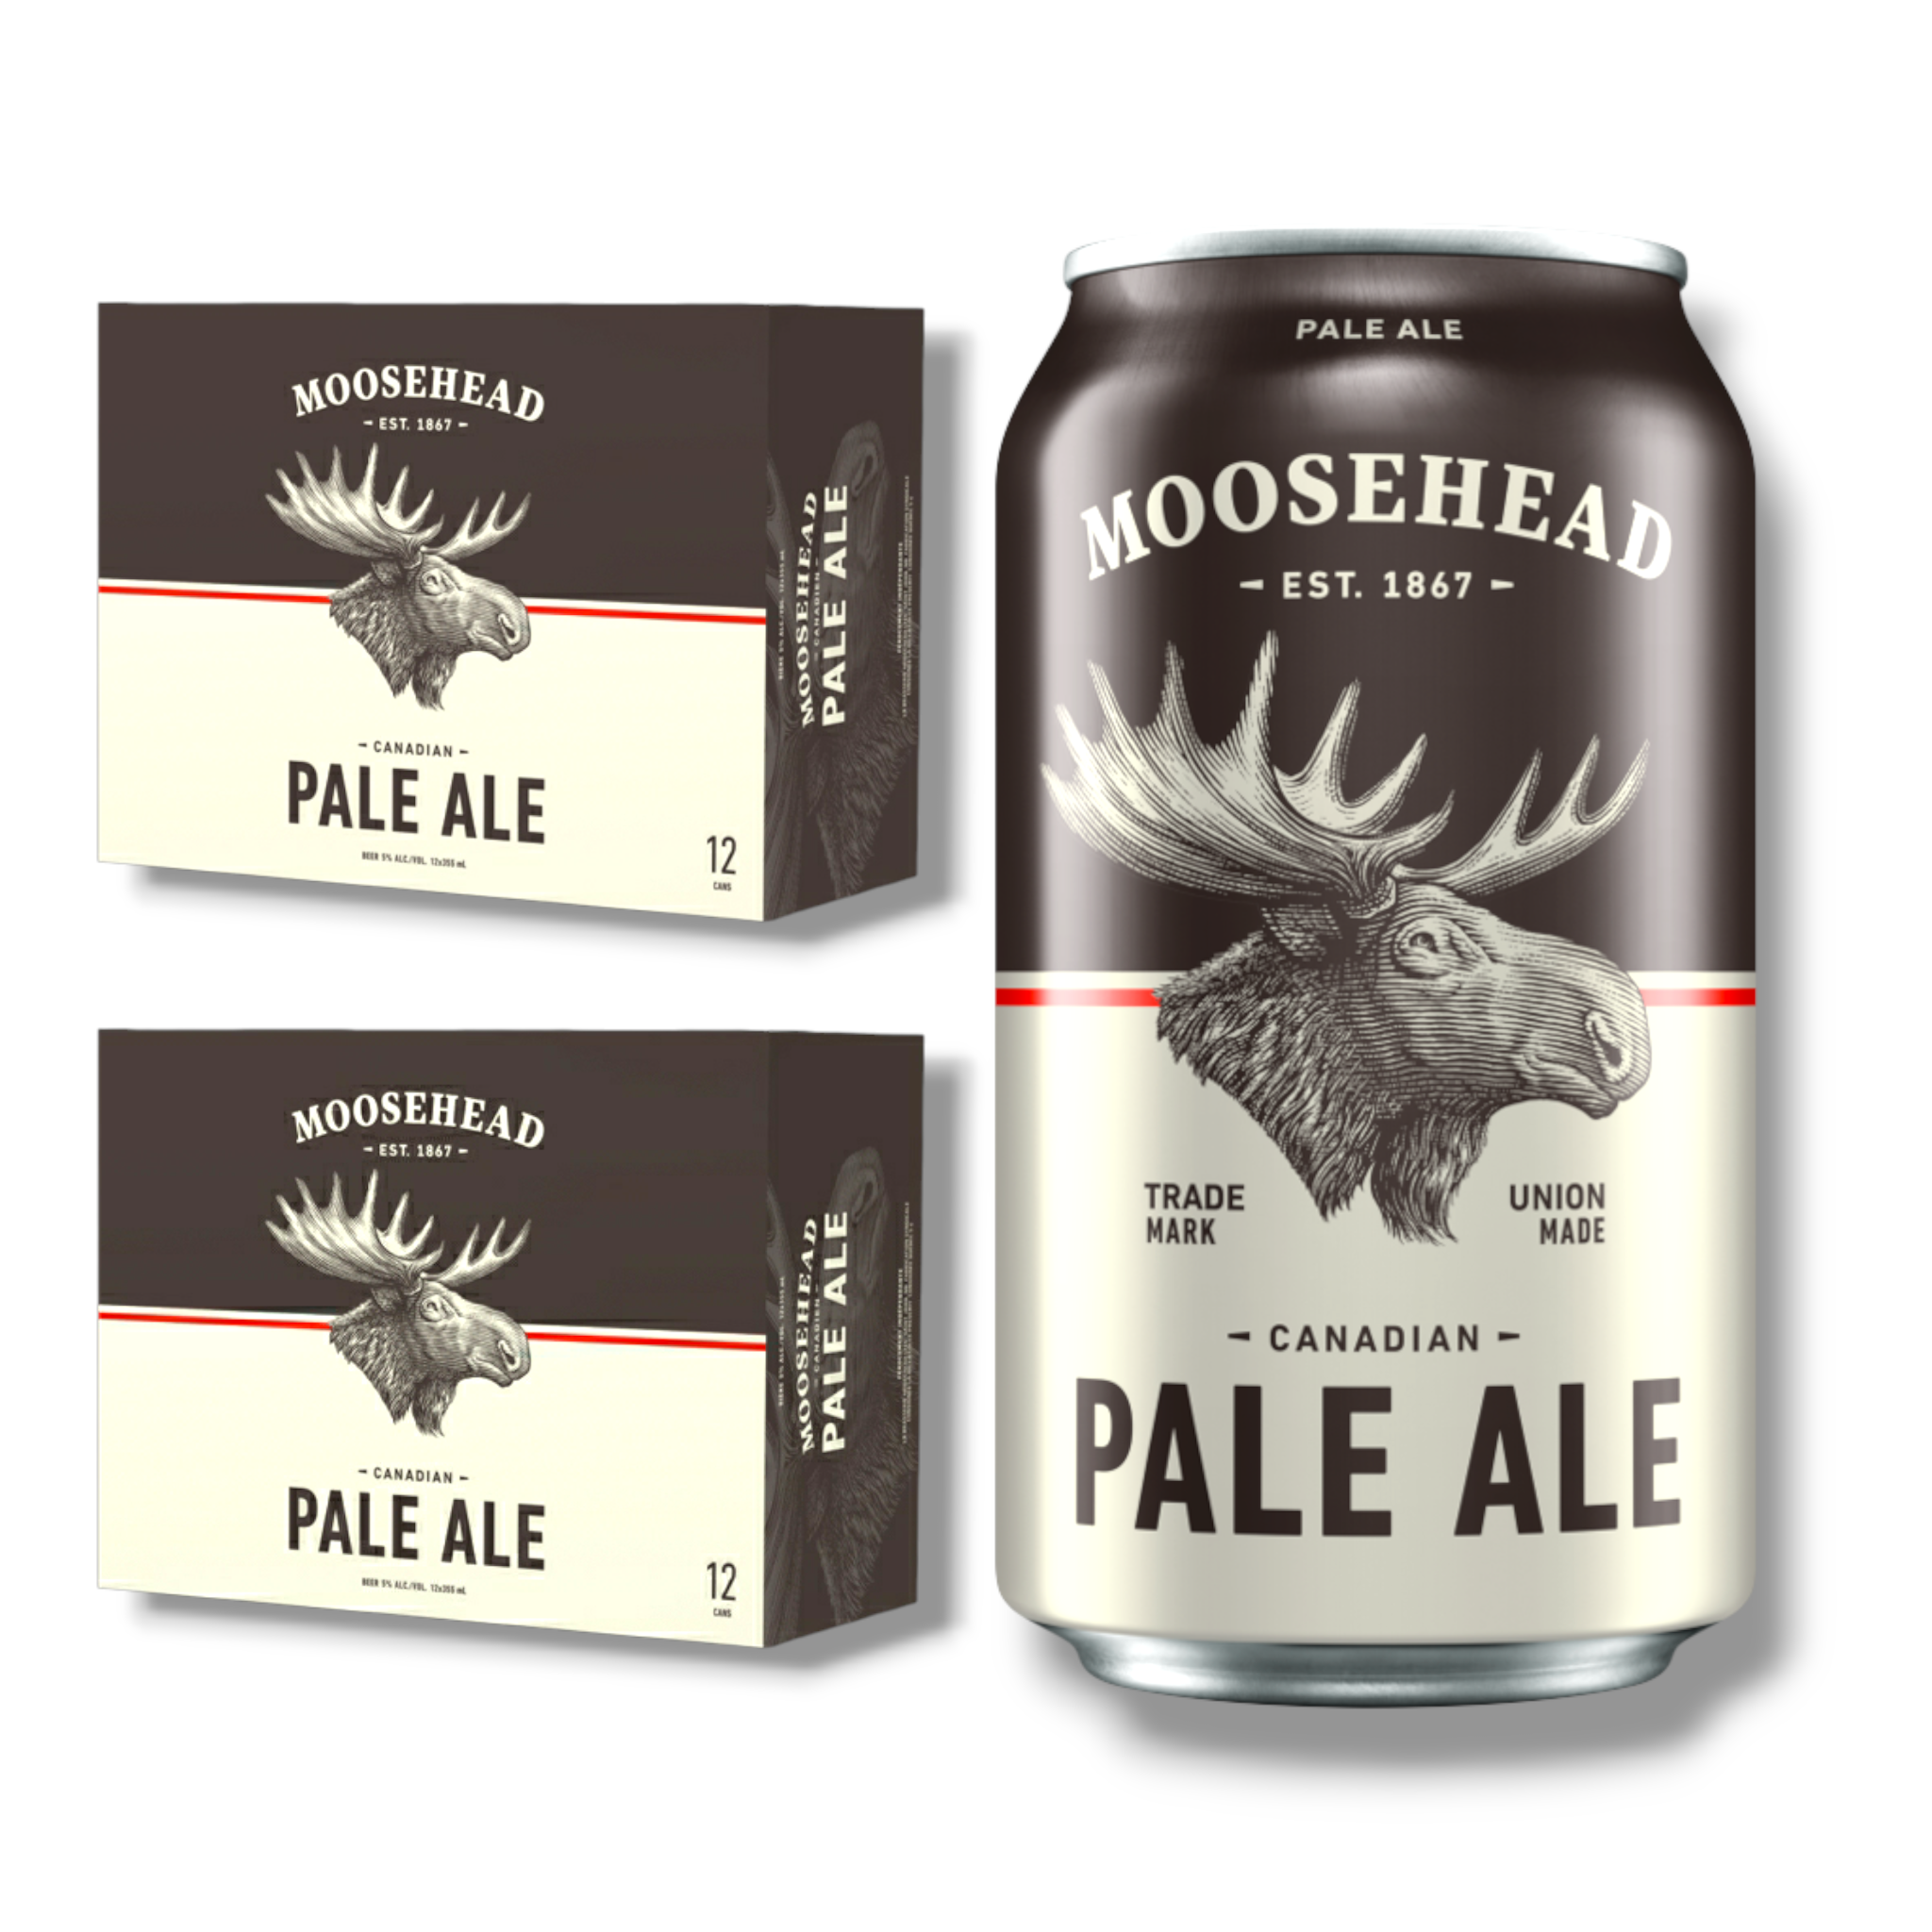 Moosehead Pale Ale Dose 0,35l - Das Pale Ale aus Kanada mit 5% Vol.